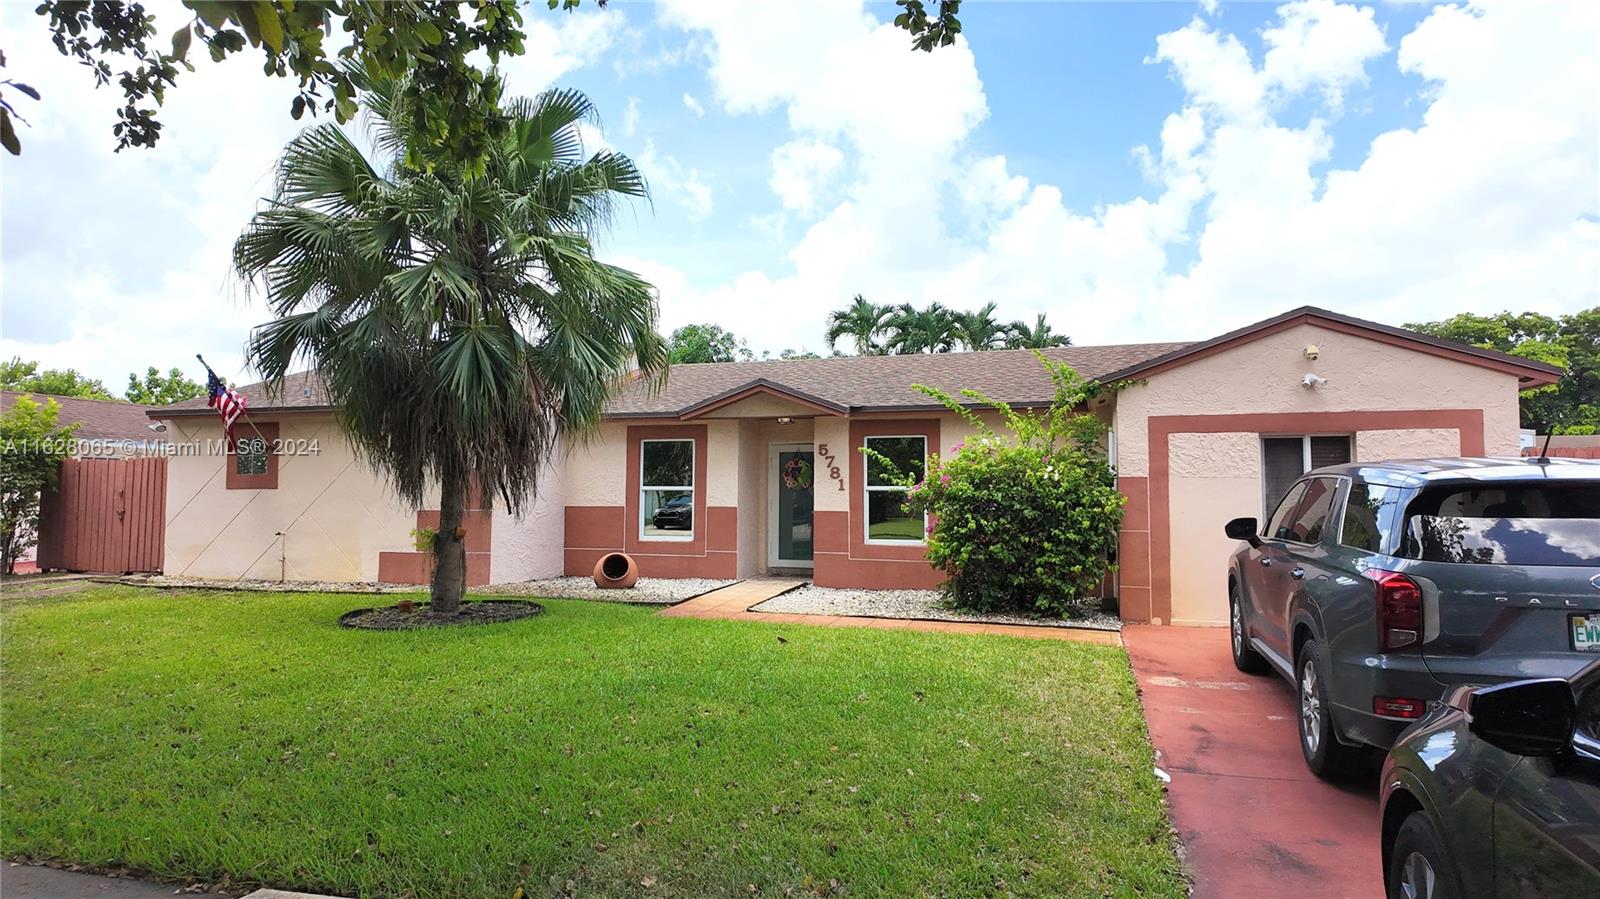 Rental Property at 5781 Nw 191st Ter Ter 5781, Hialeah, Miami-Dade County, Florida - Bedrooms: 3 
Bathrooms: 2  - $3,800 MO.